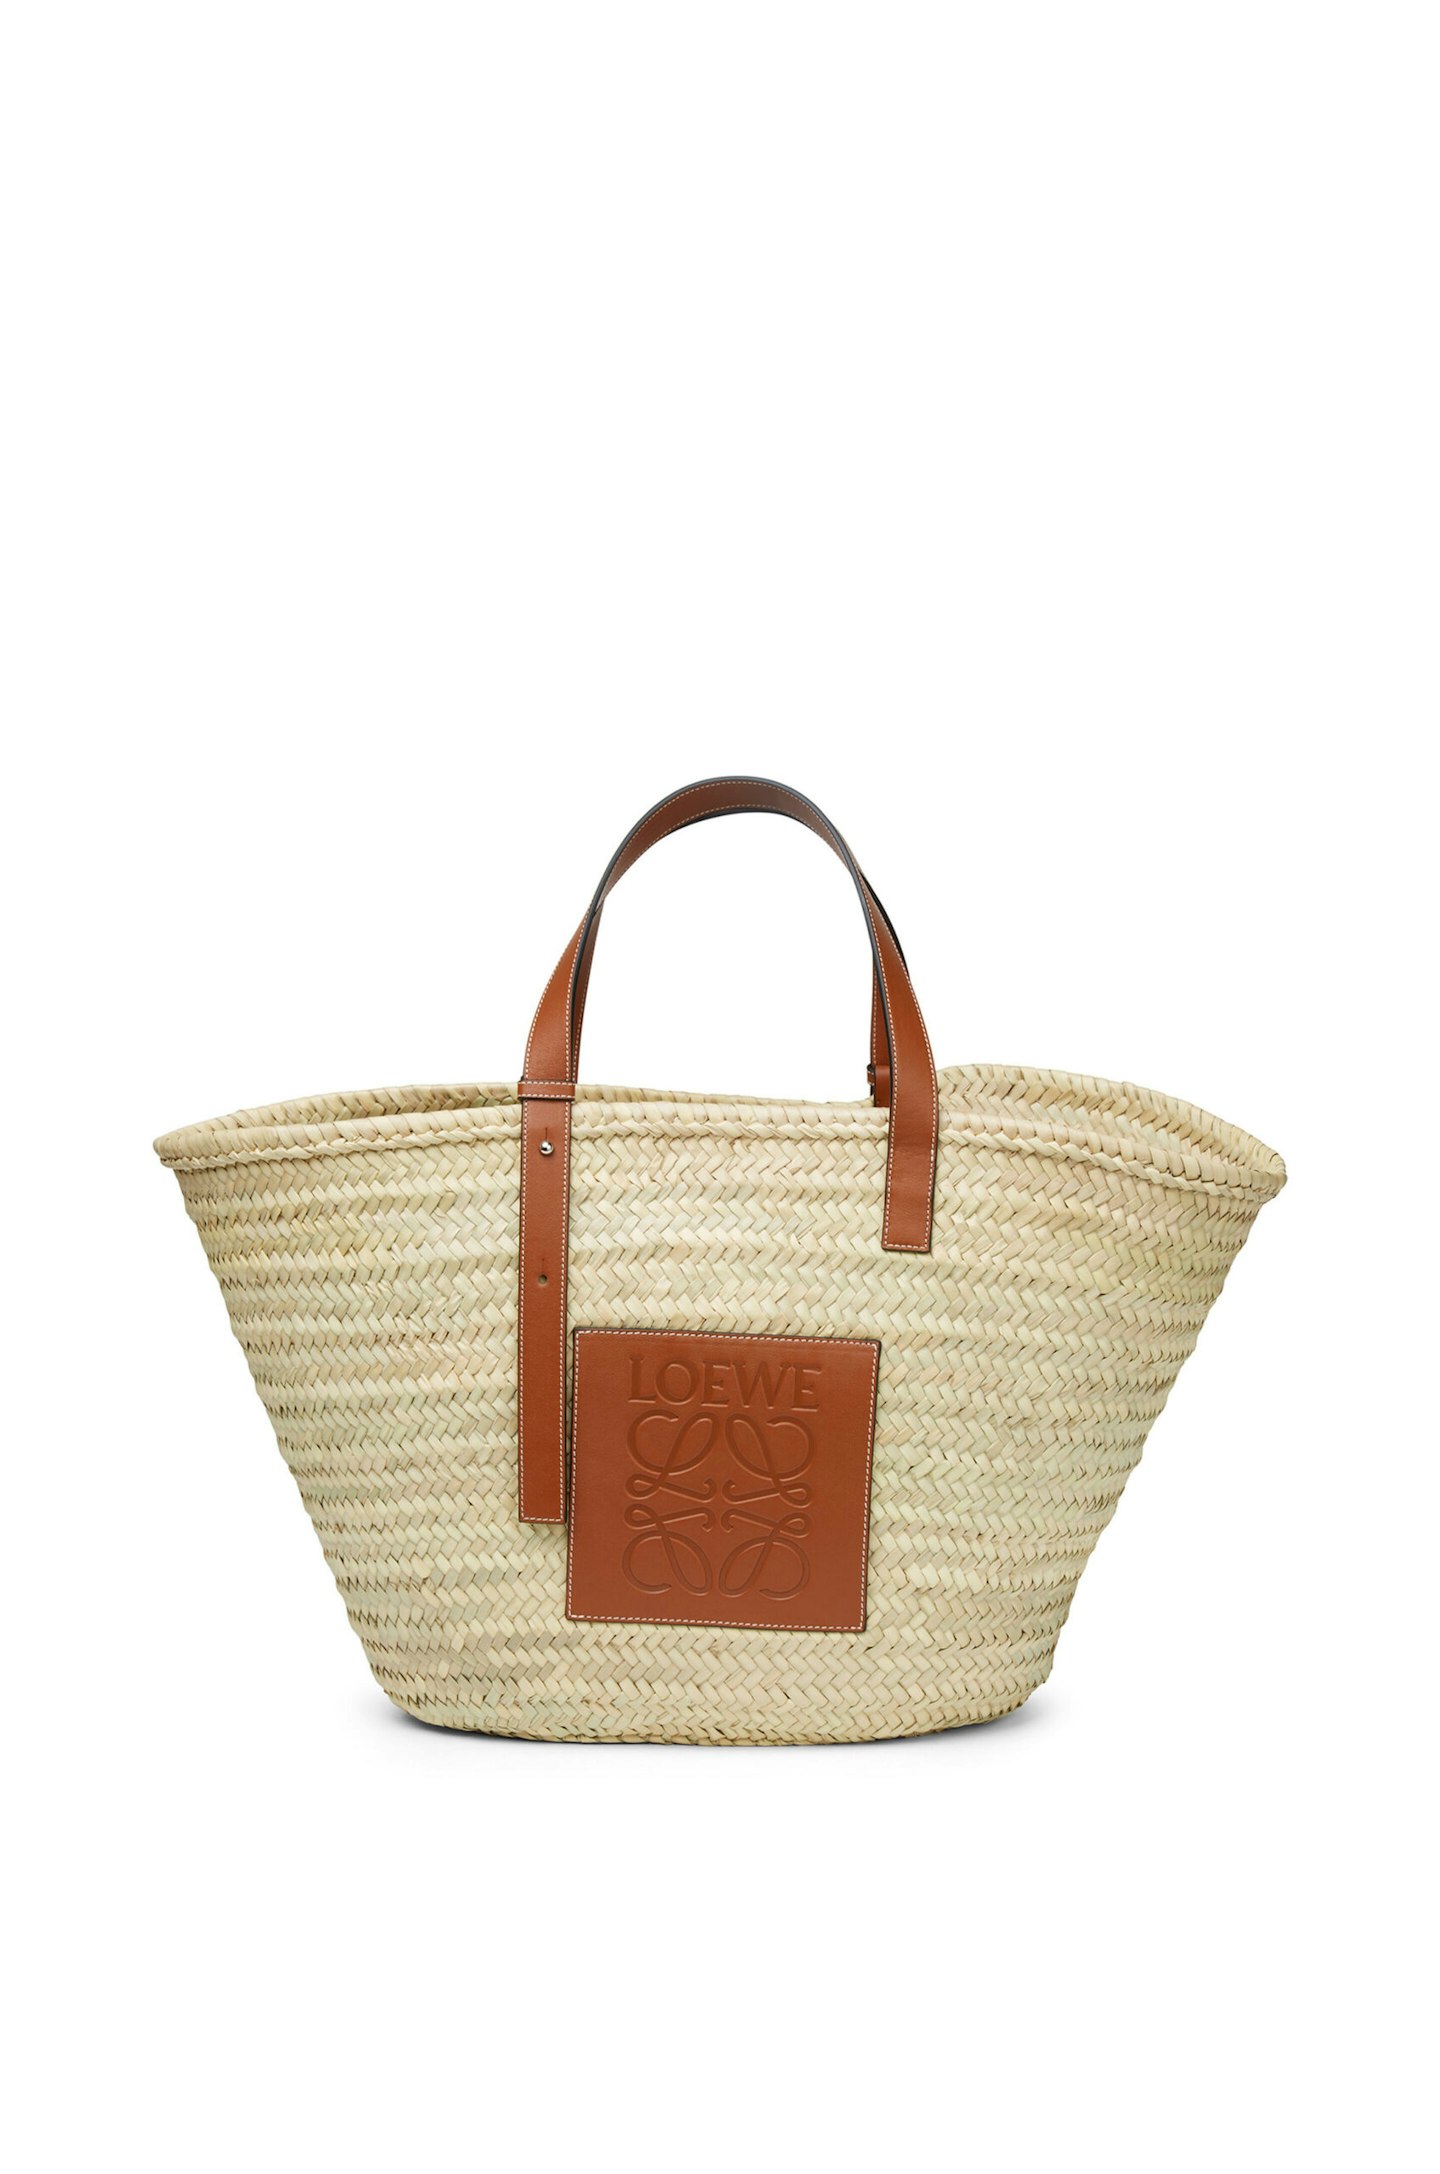 This Loewe Basket Bag Is The Ultimate Beach Accessory